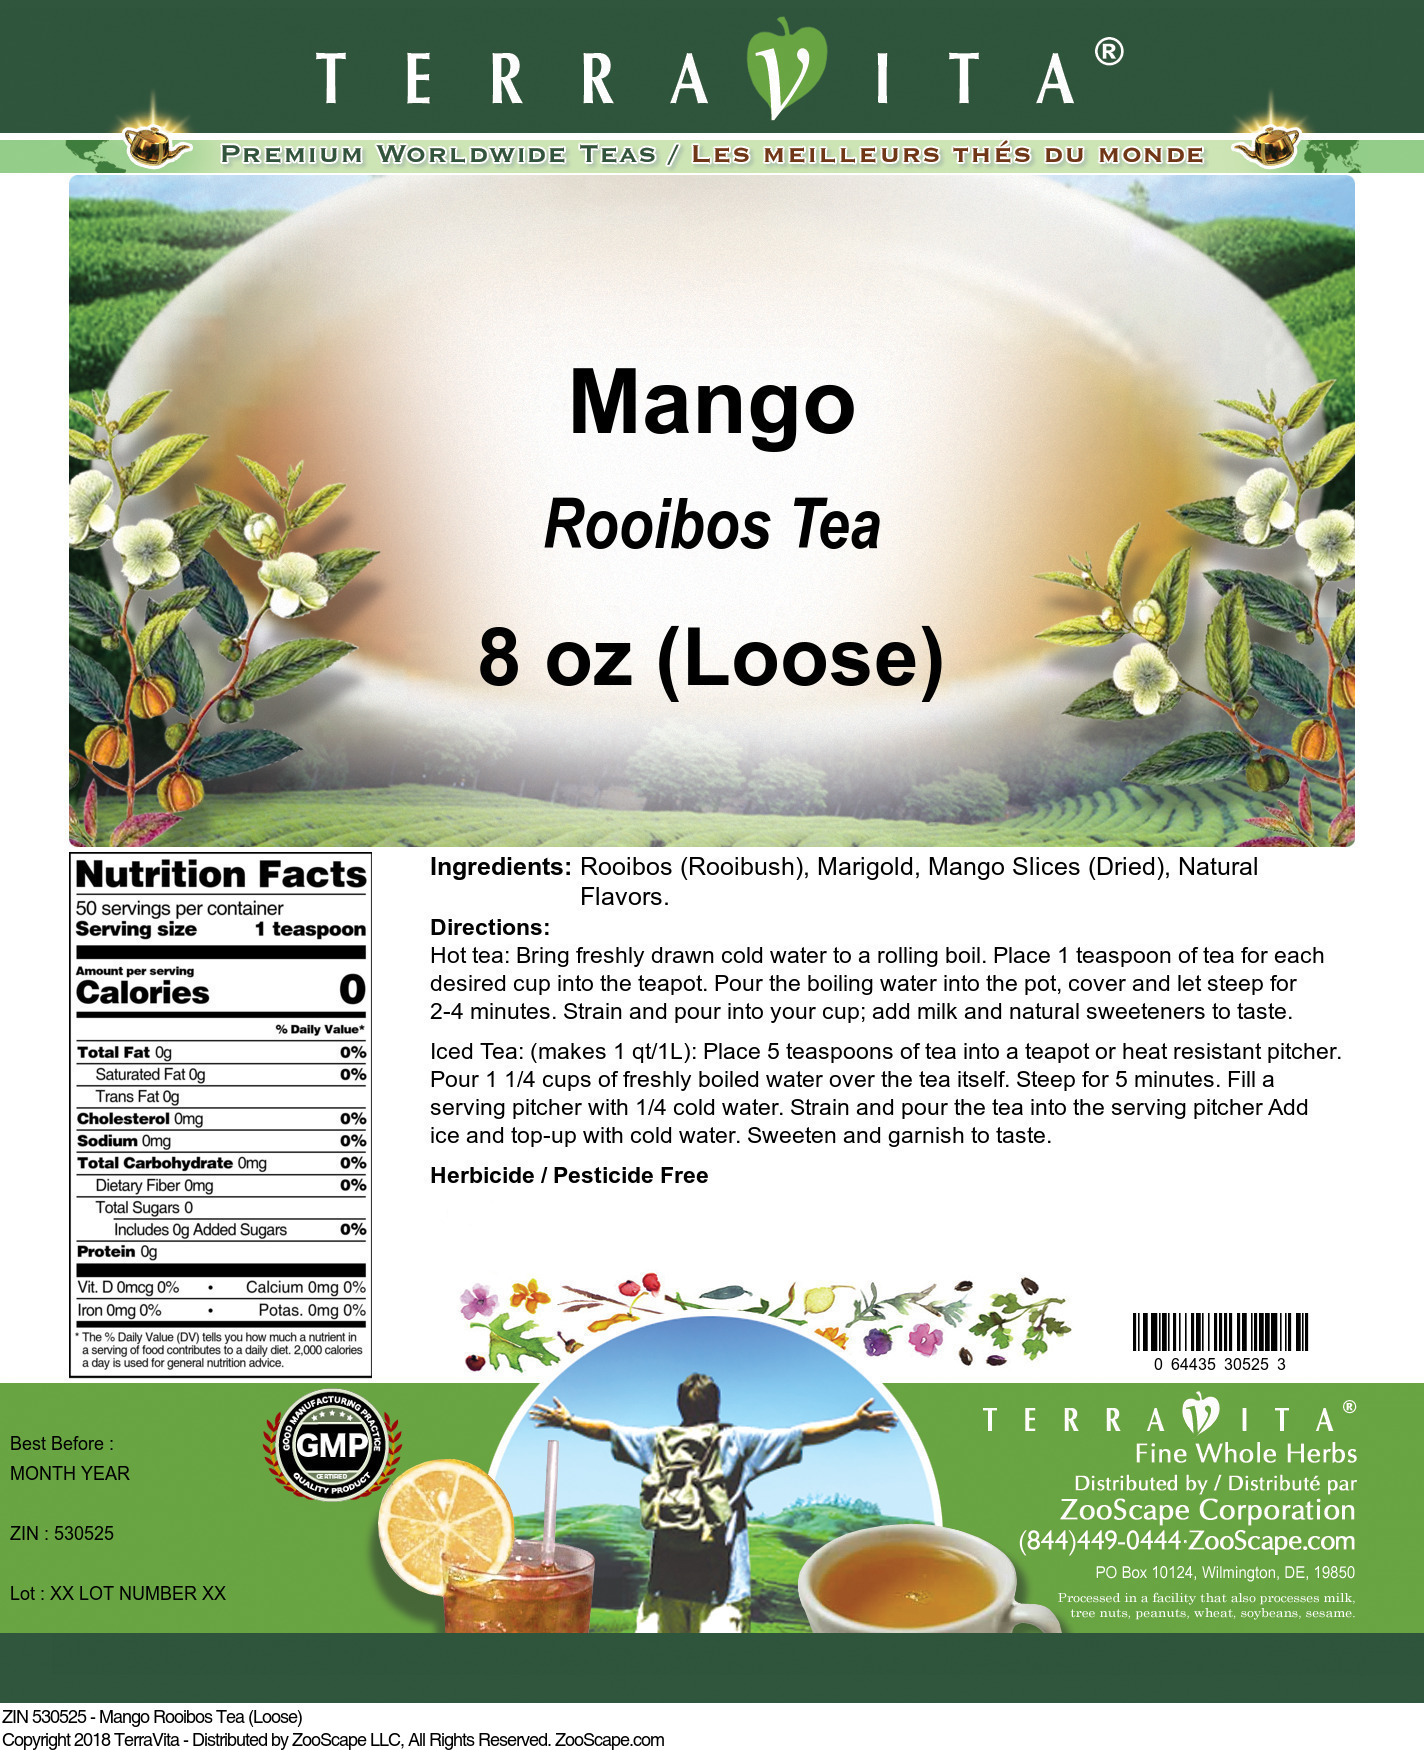 Mango Rooibos Tea (Loose) - Label